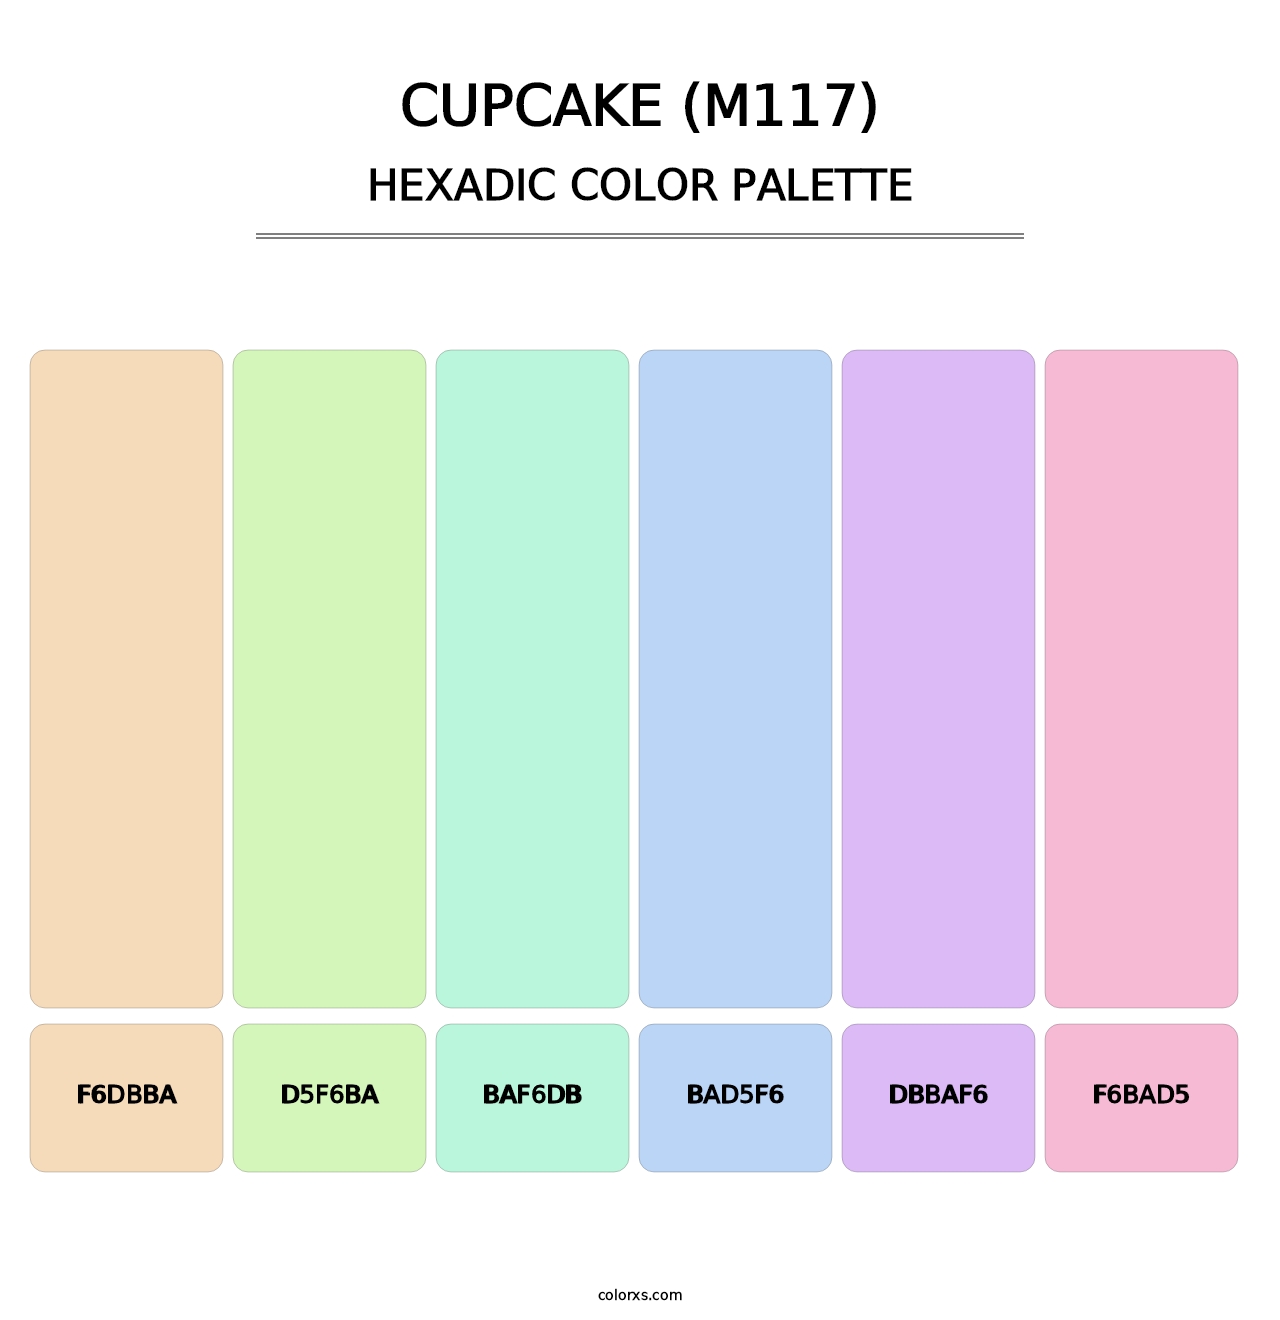 Cupcake (M117) - Hexadic Color Palette